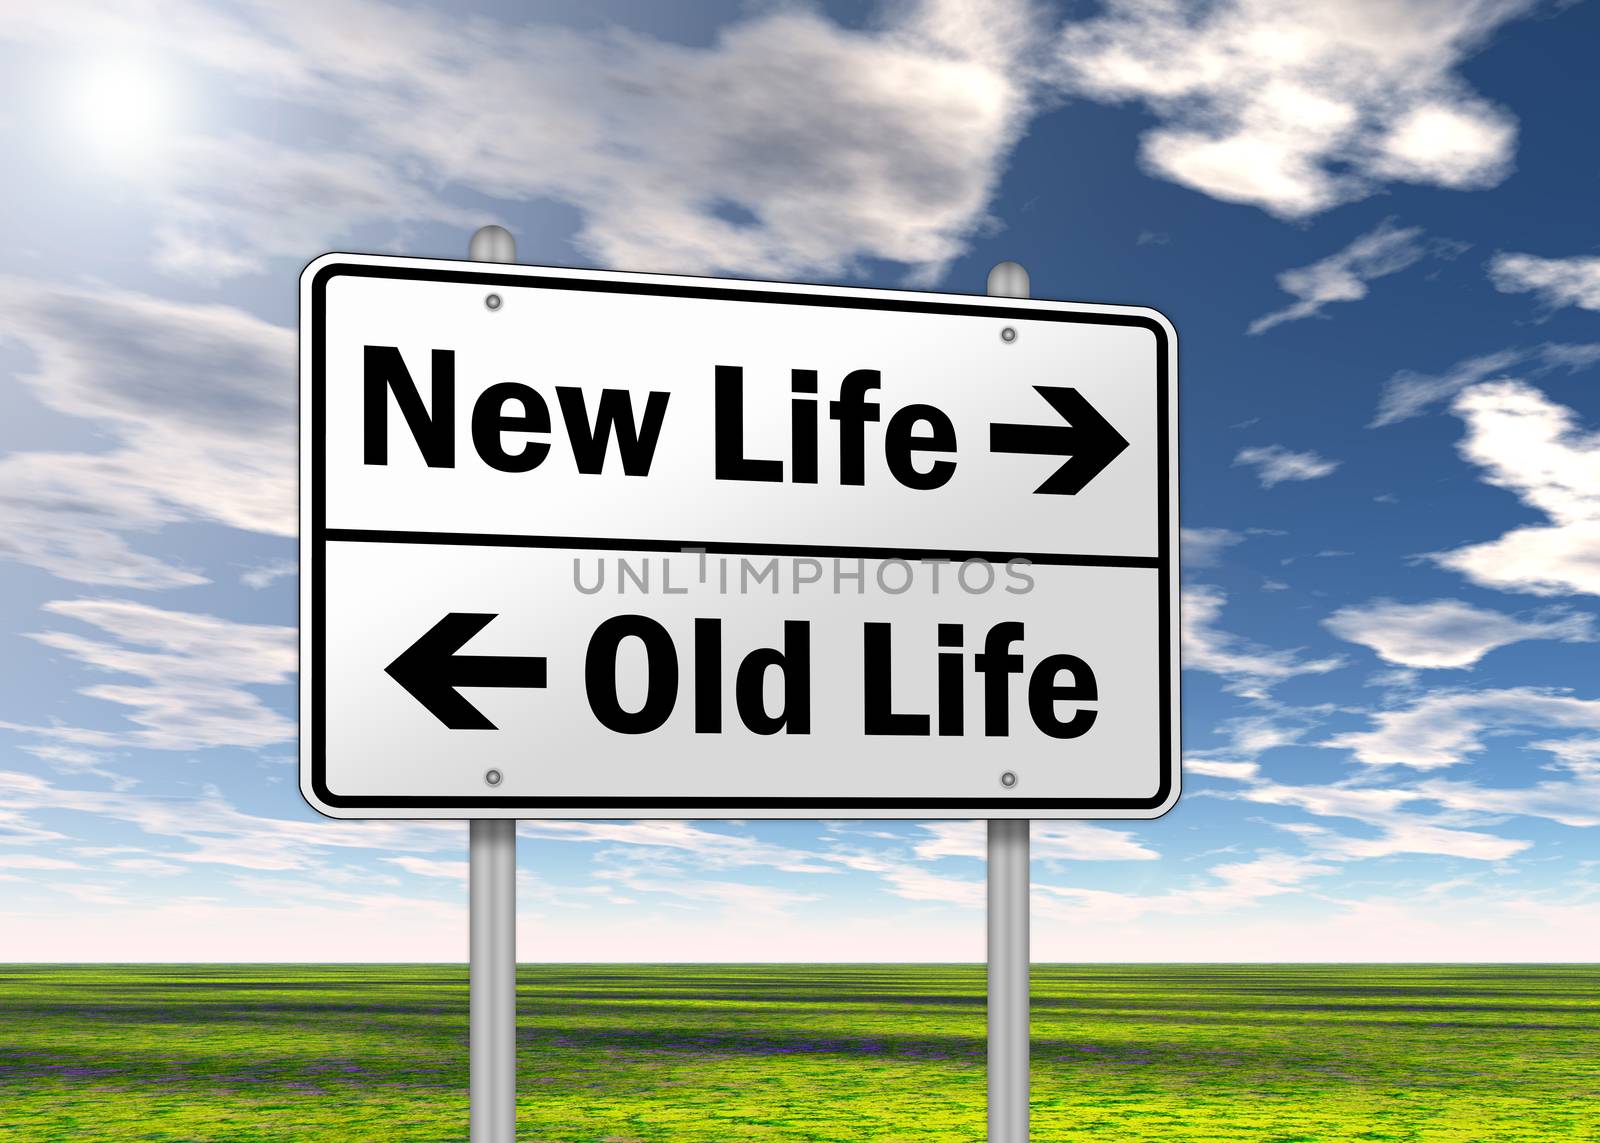 Traffic Sign "New Life vs. Old Life" by mindscanner